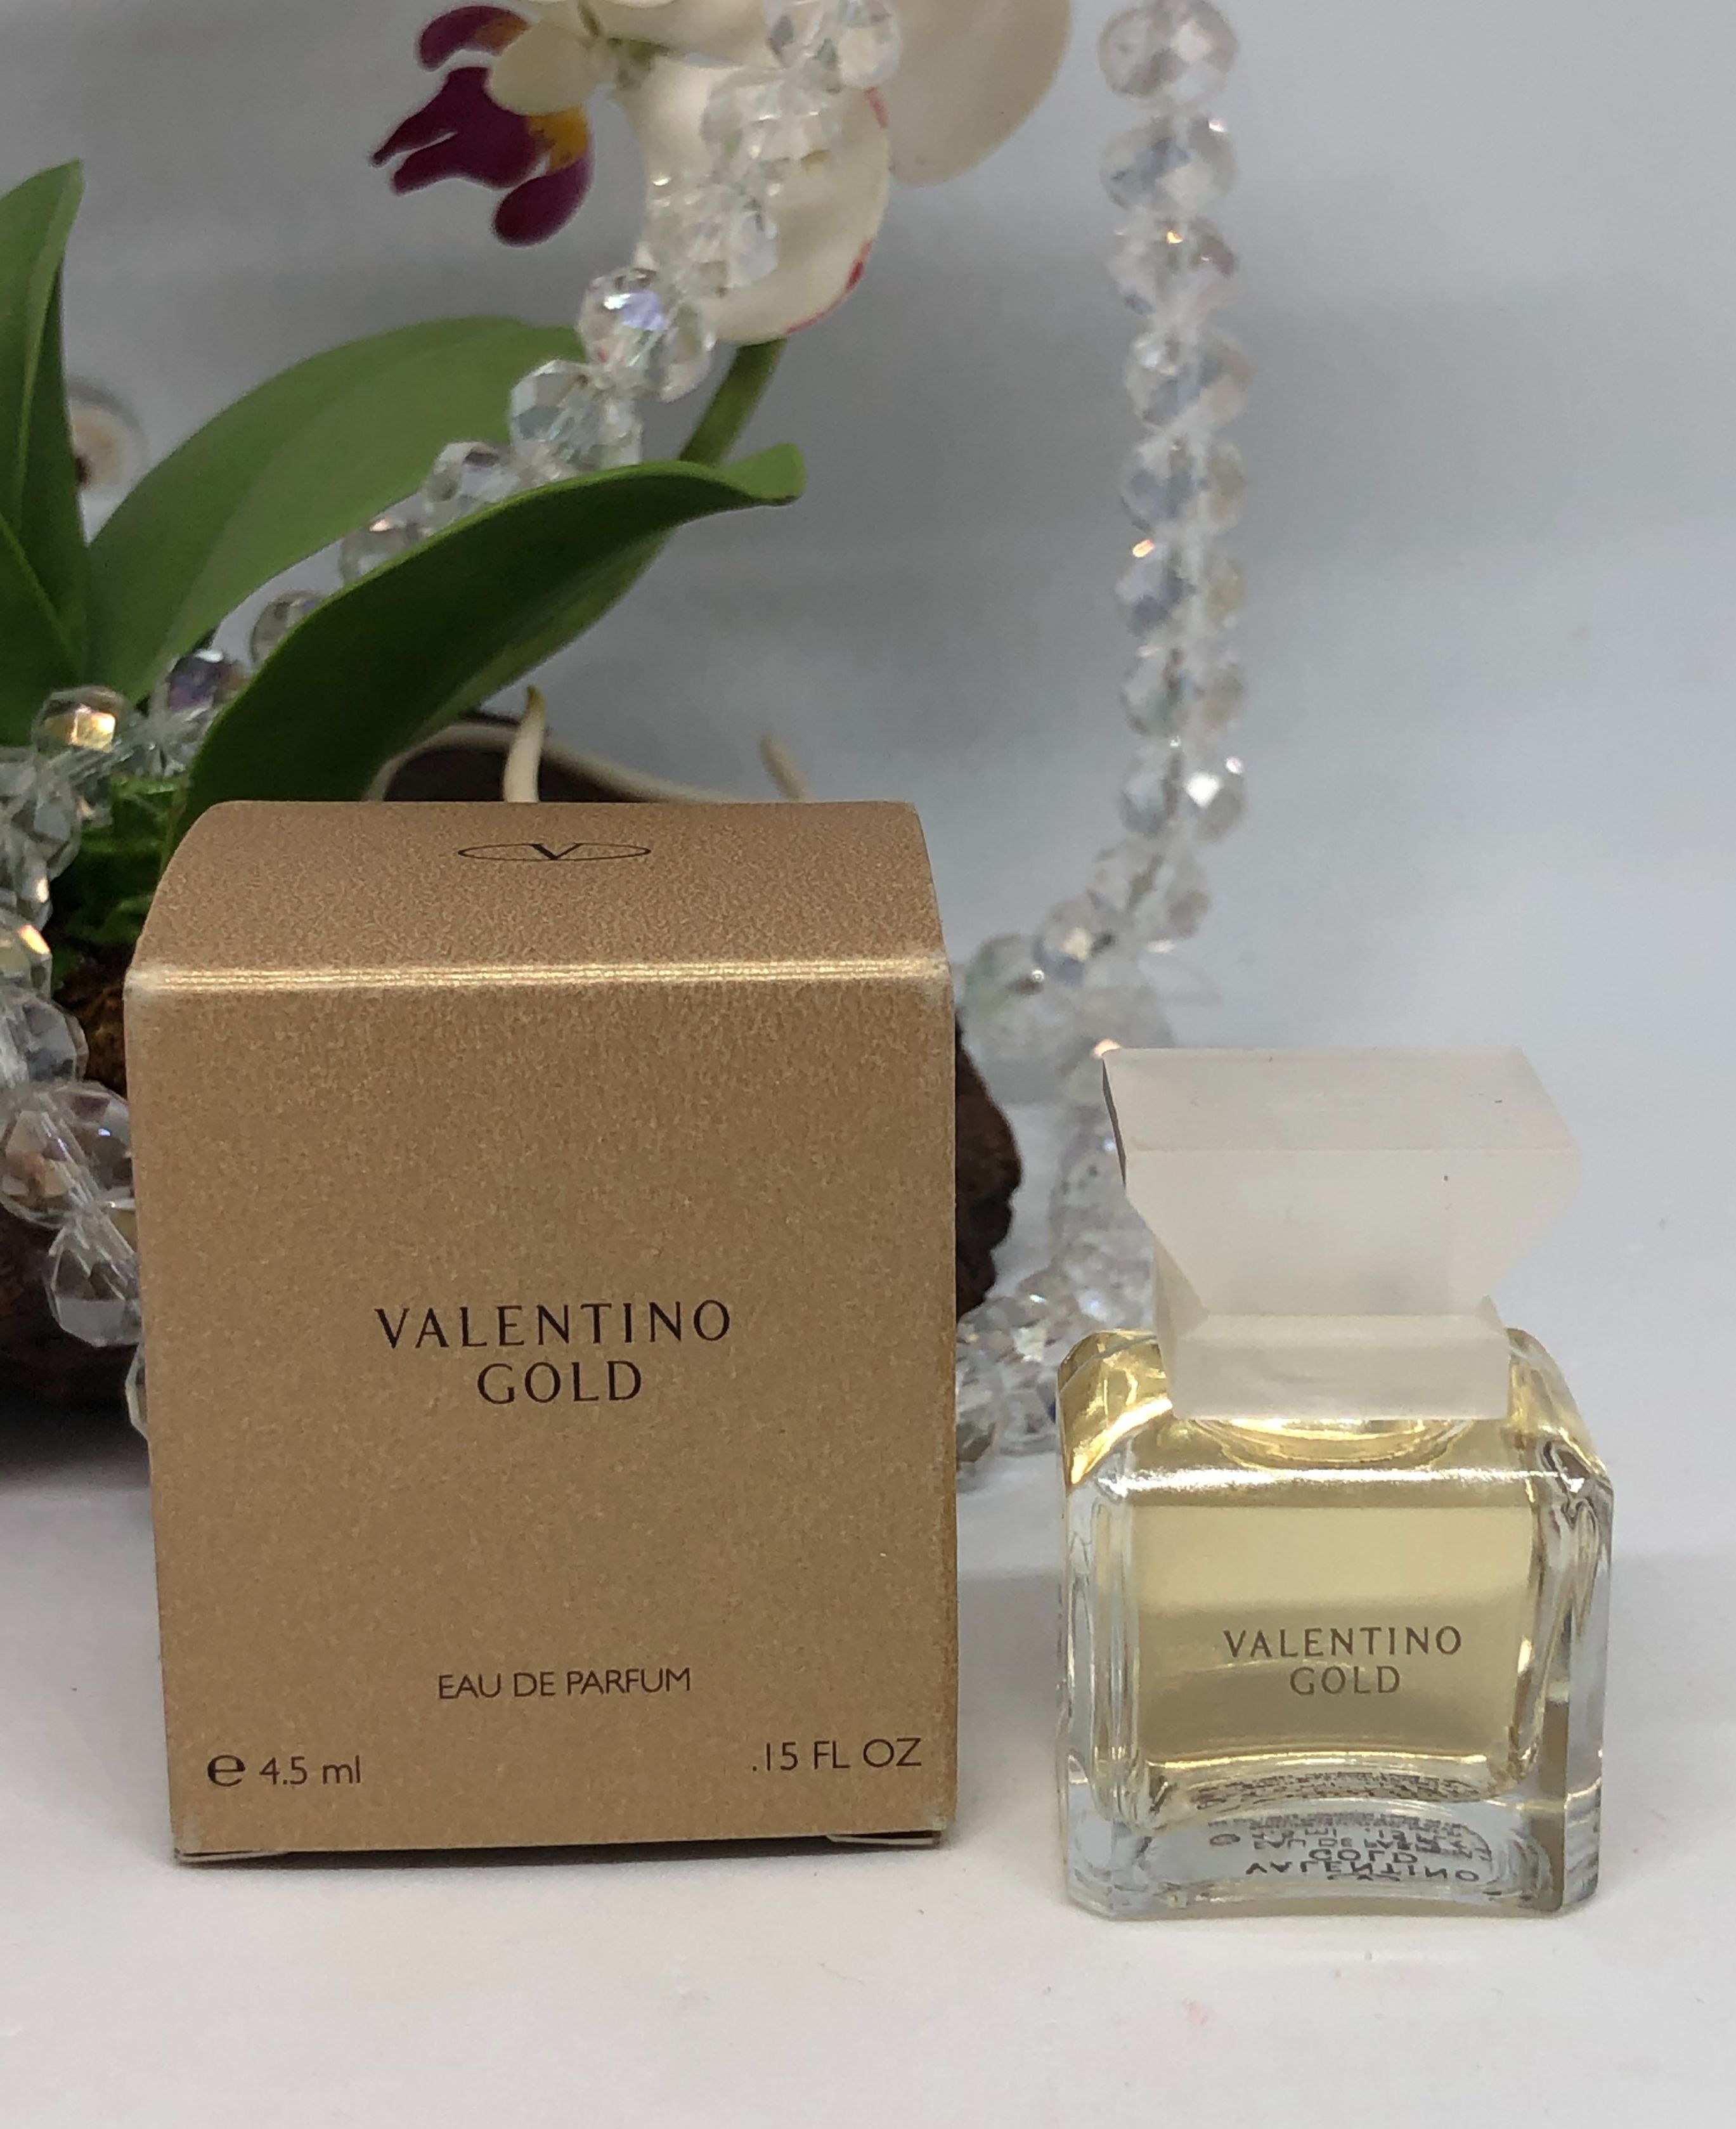 Valentino Gold by Valentino EDP Miniature Splash Parfum - .15 oz - New ...